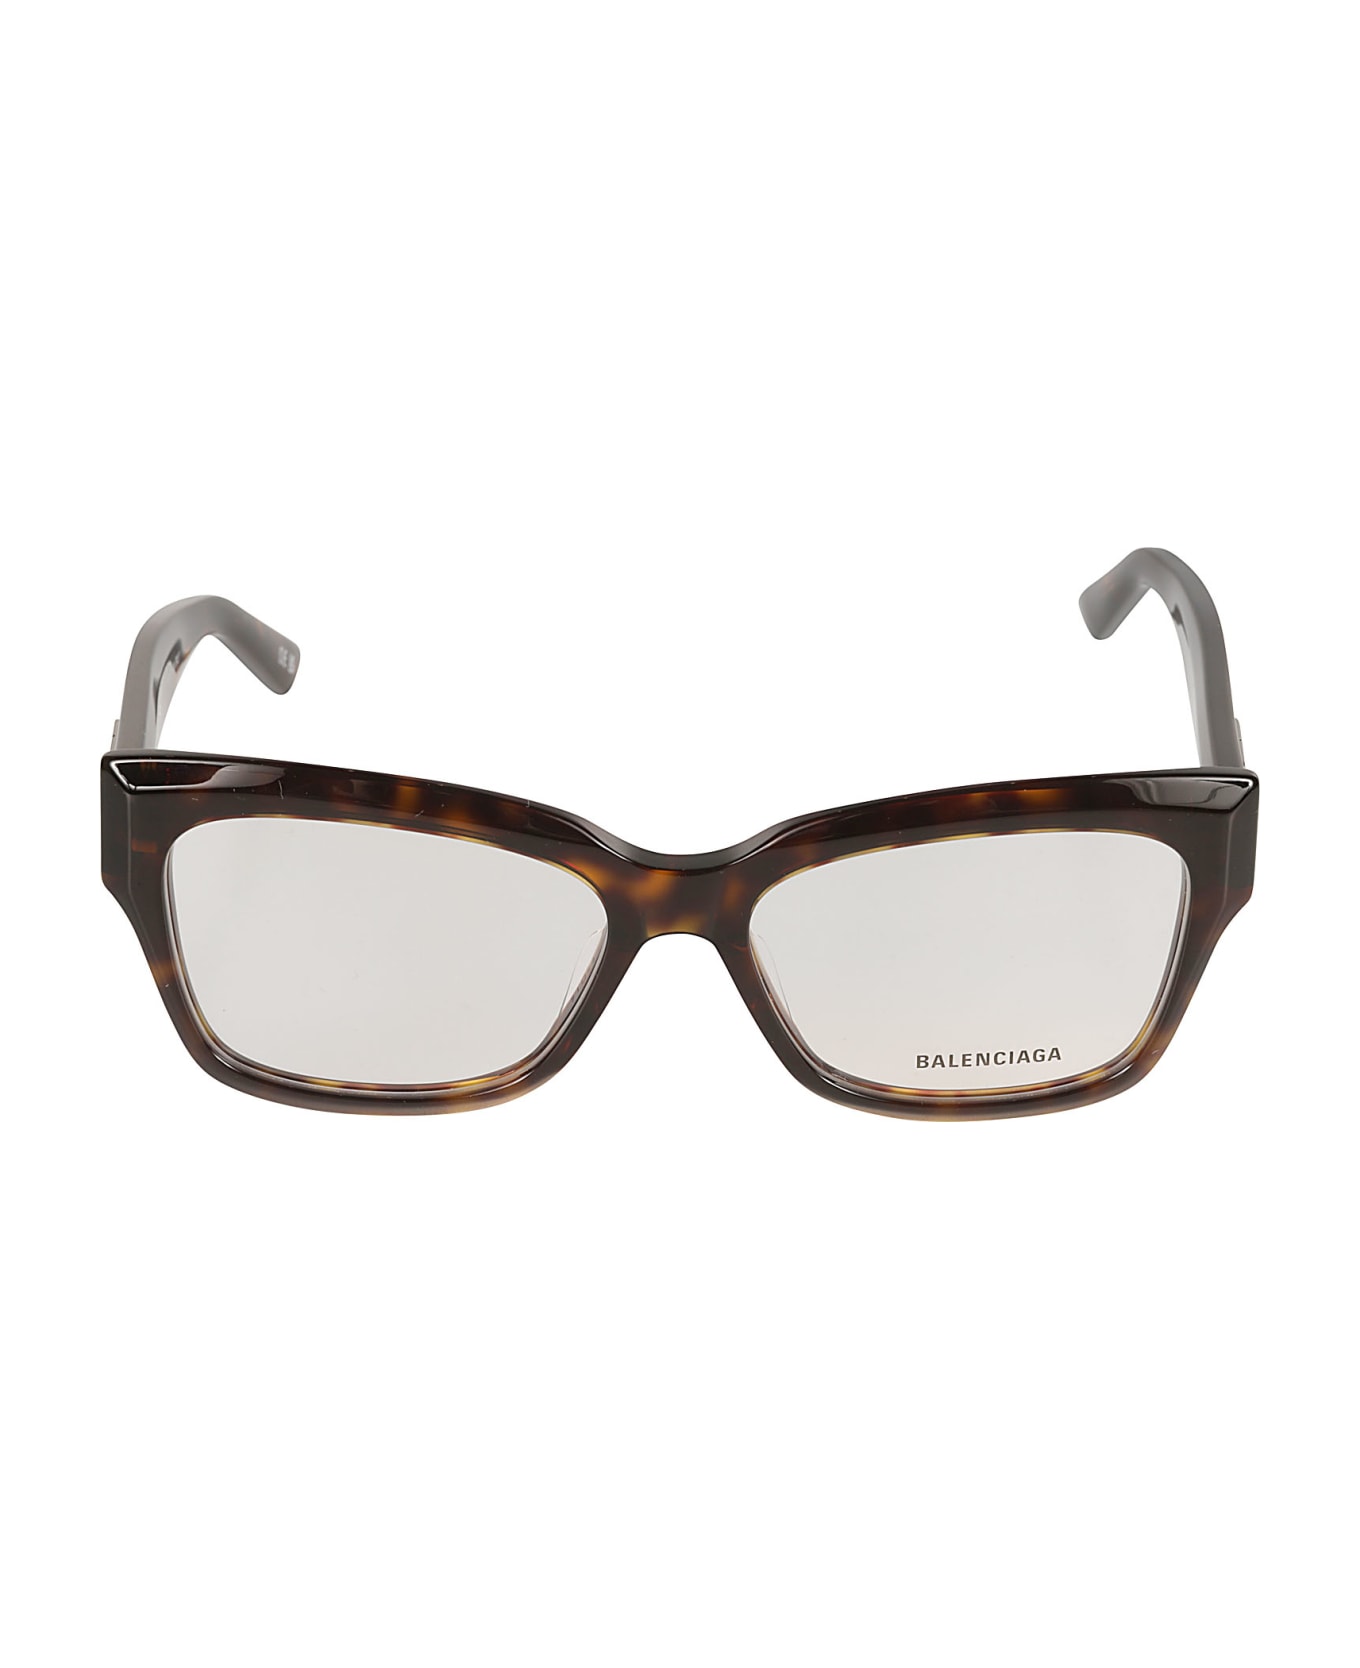 Balenciaga Eyewear Flame Effect Square Glasses - Havana/Transparent アイウェア